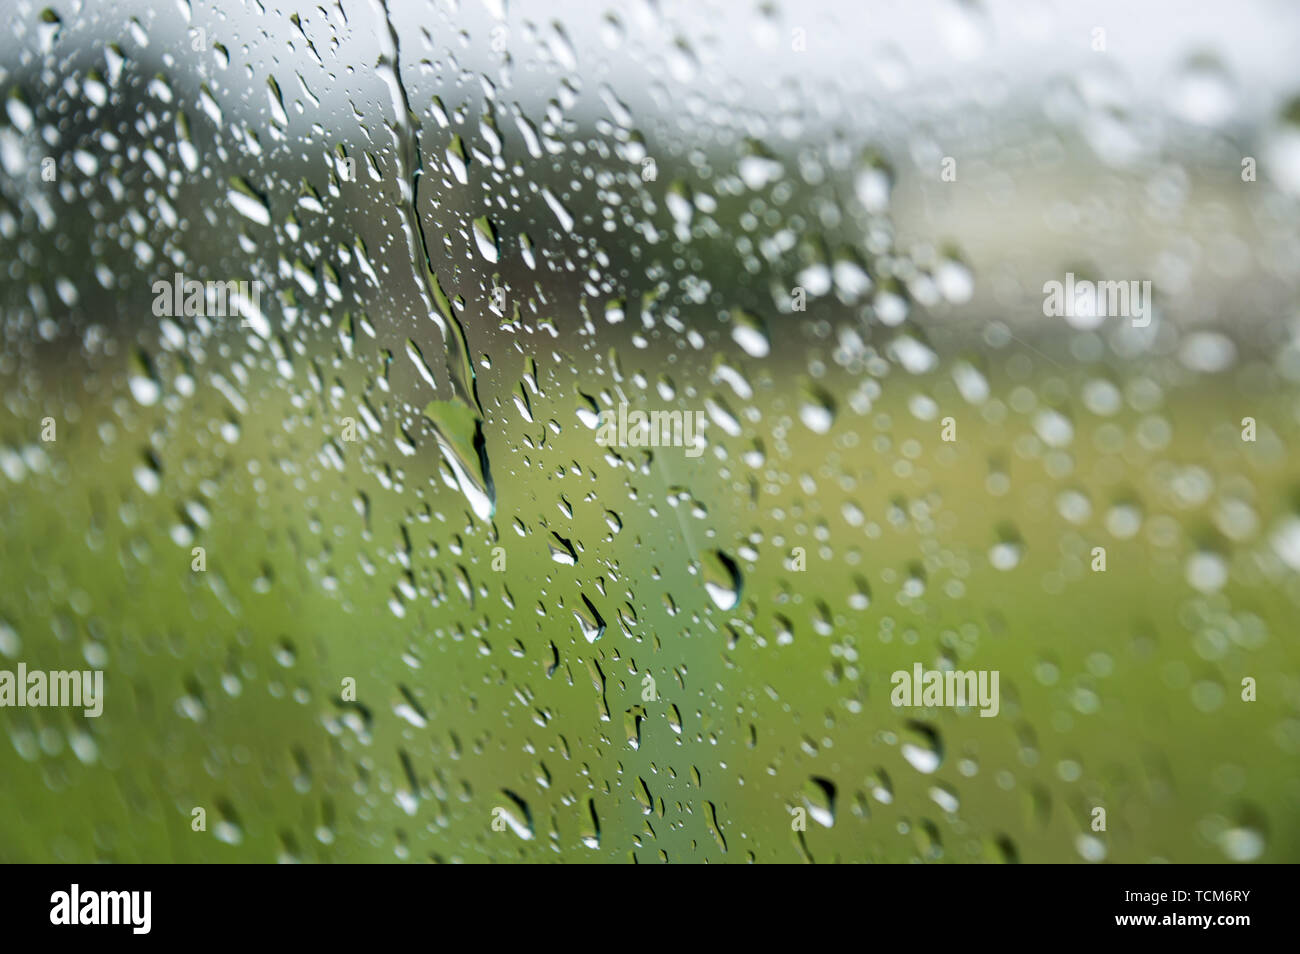 Raindrops on a window Stock Photo